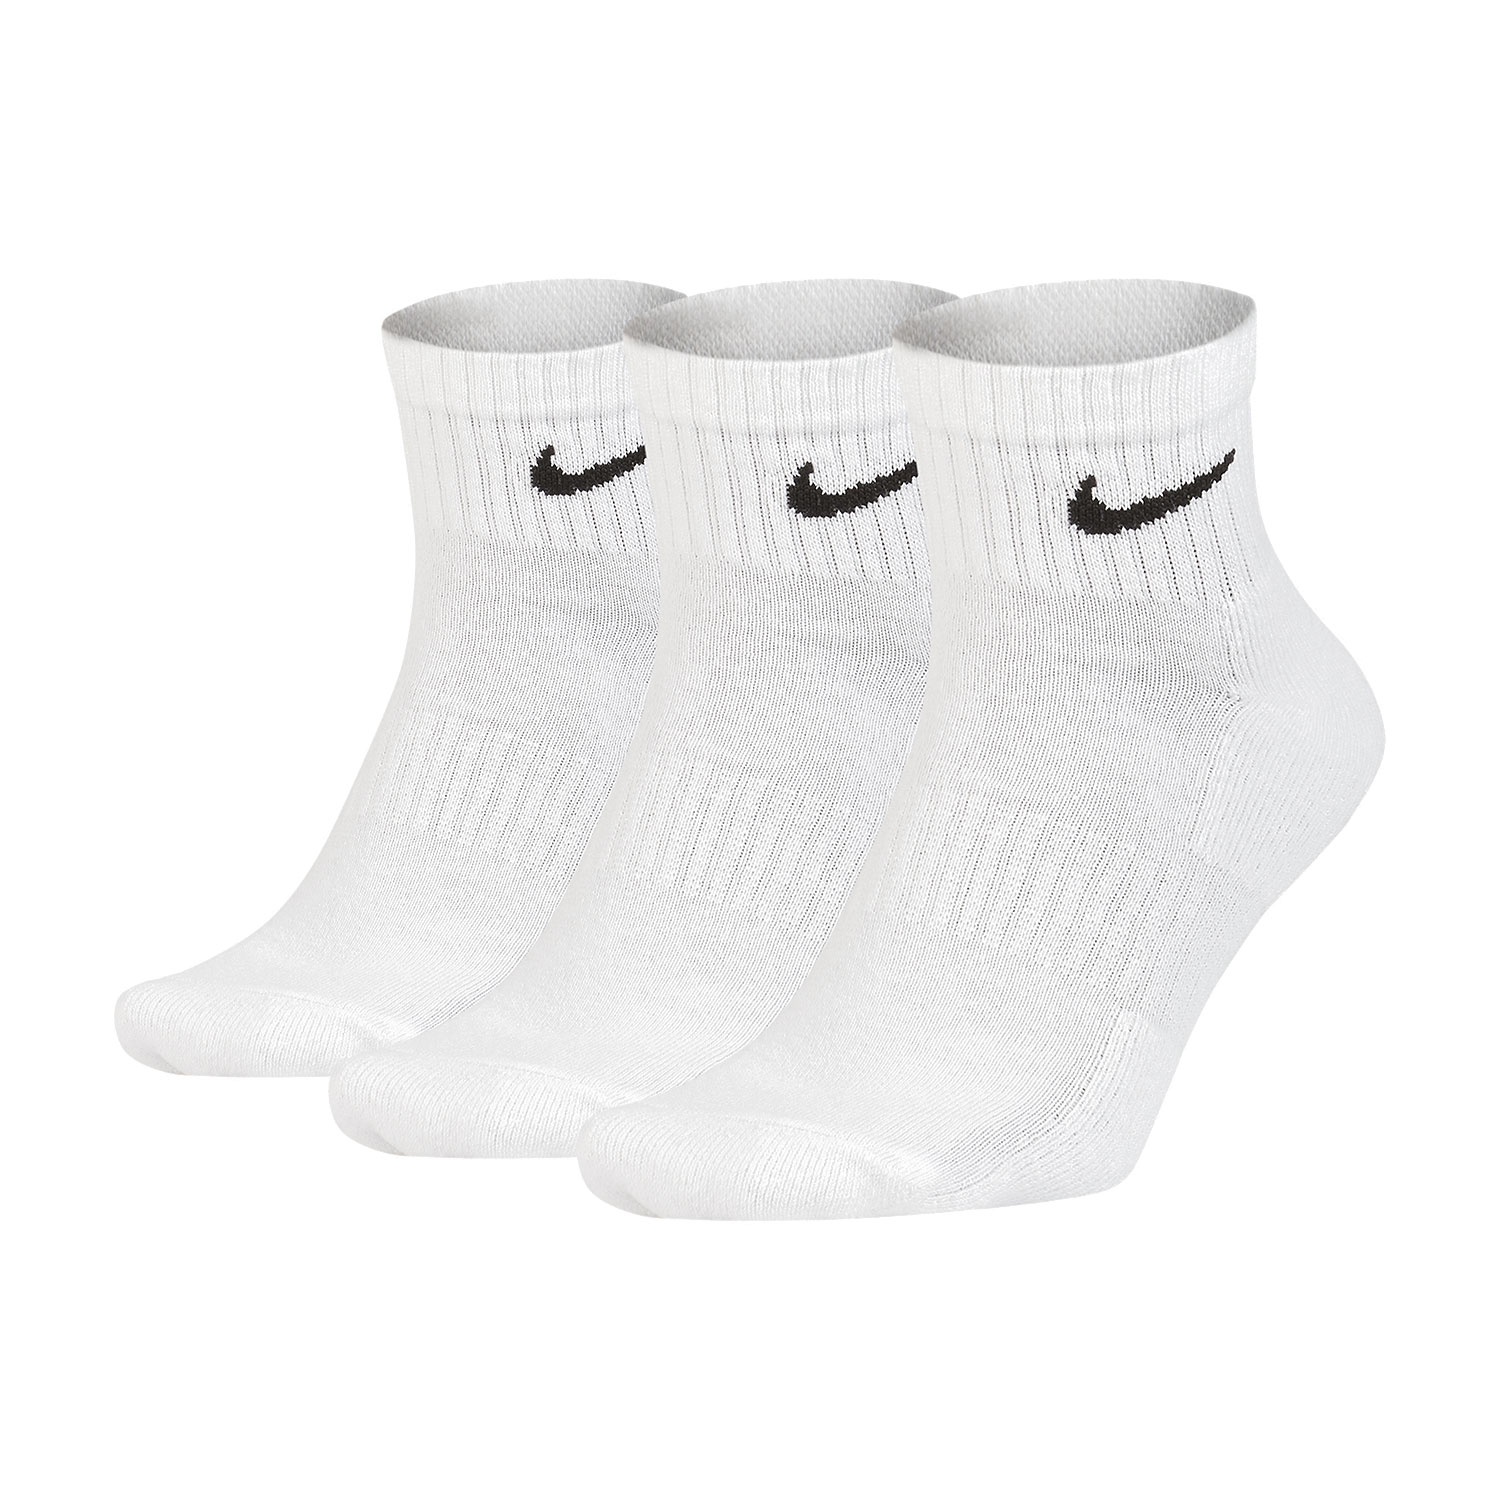 Nike Everyday Cushion x 3 Socks - White/Black